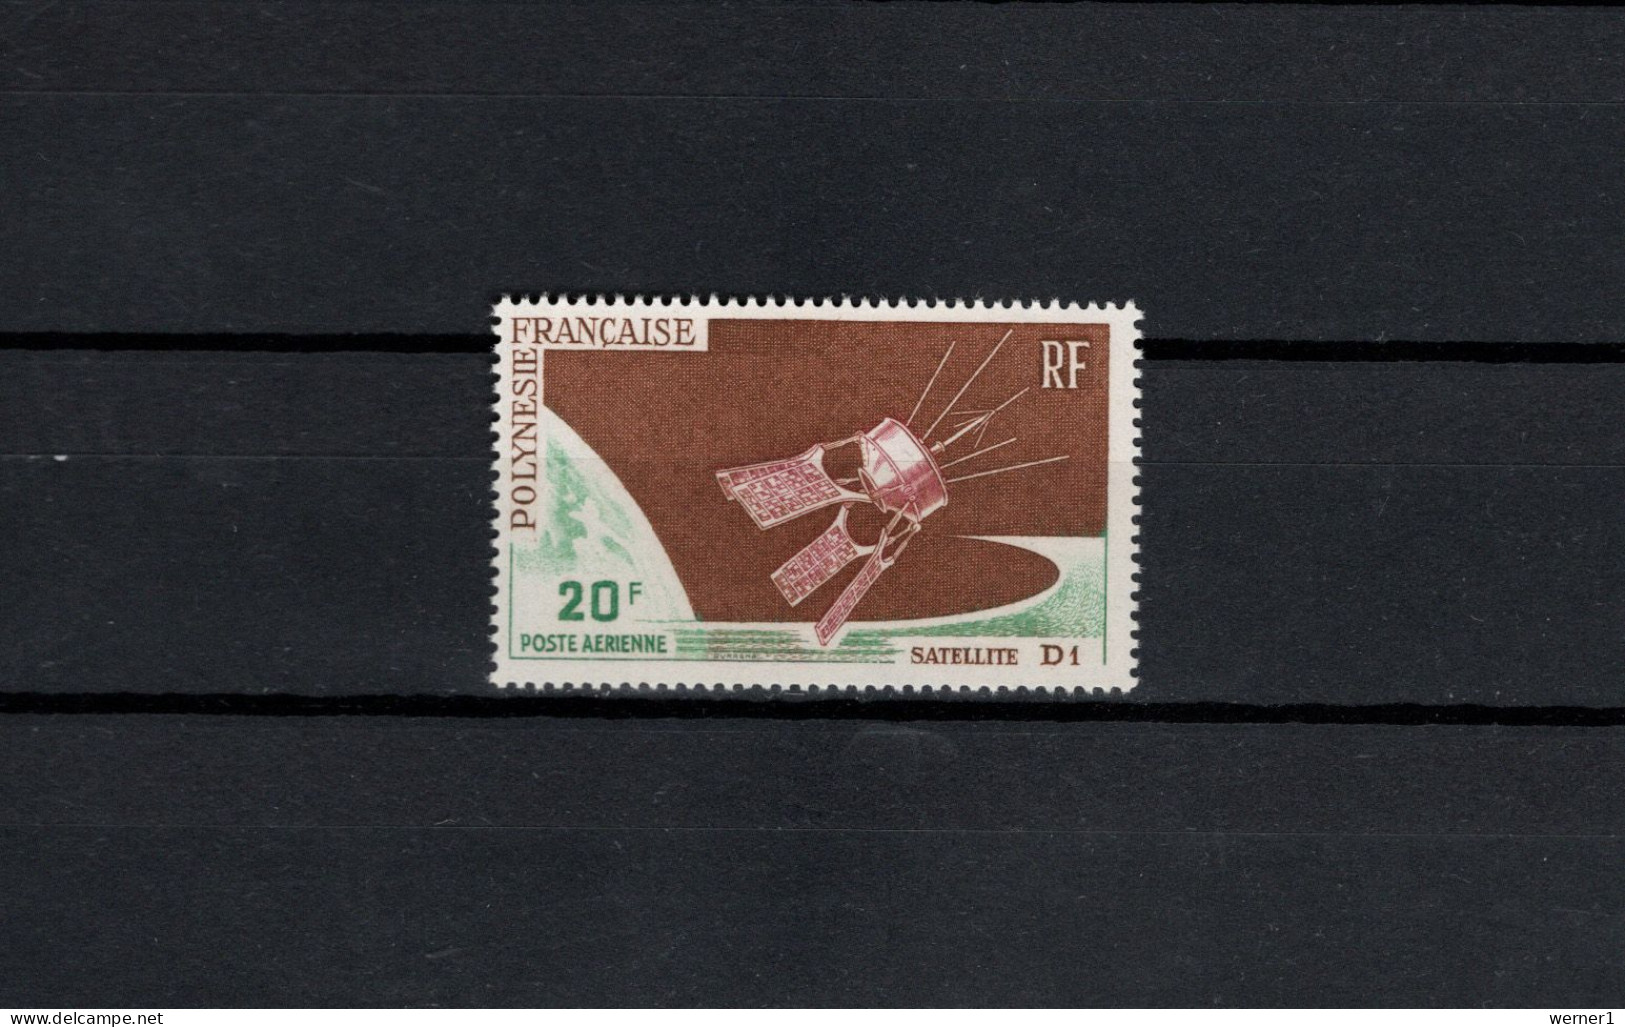 French Polynesia 1966 Space, D1 Satellite Stamp MNH - Ozeanien